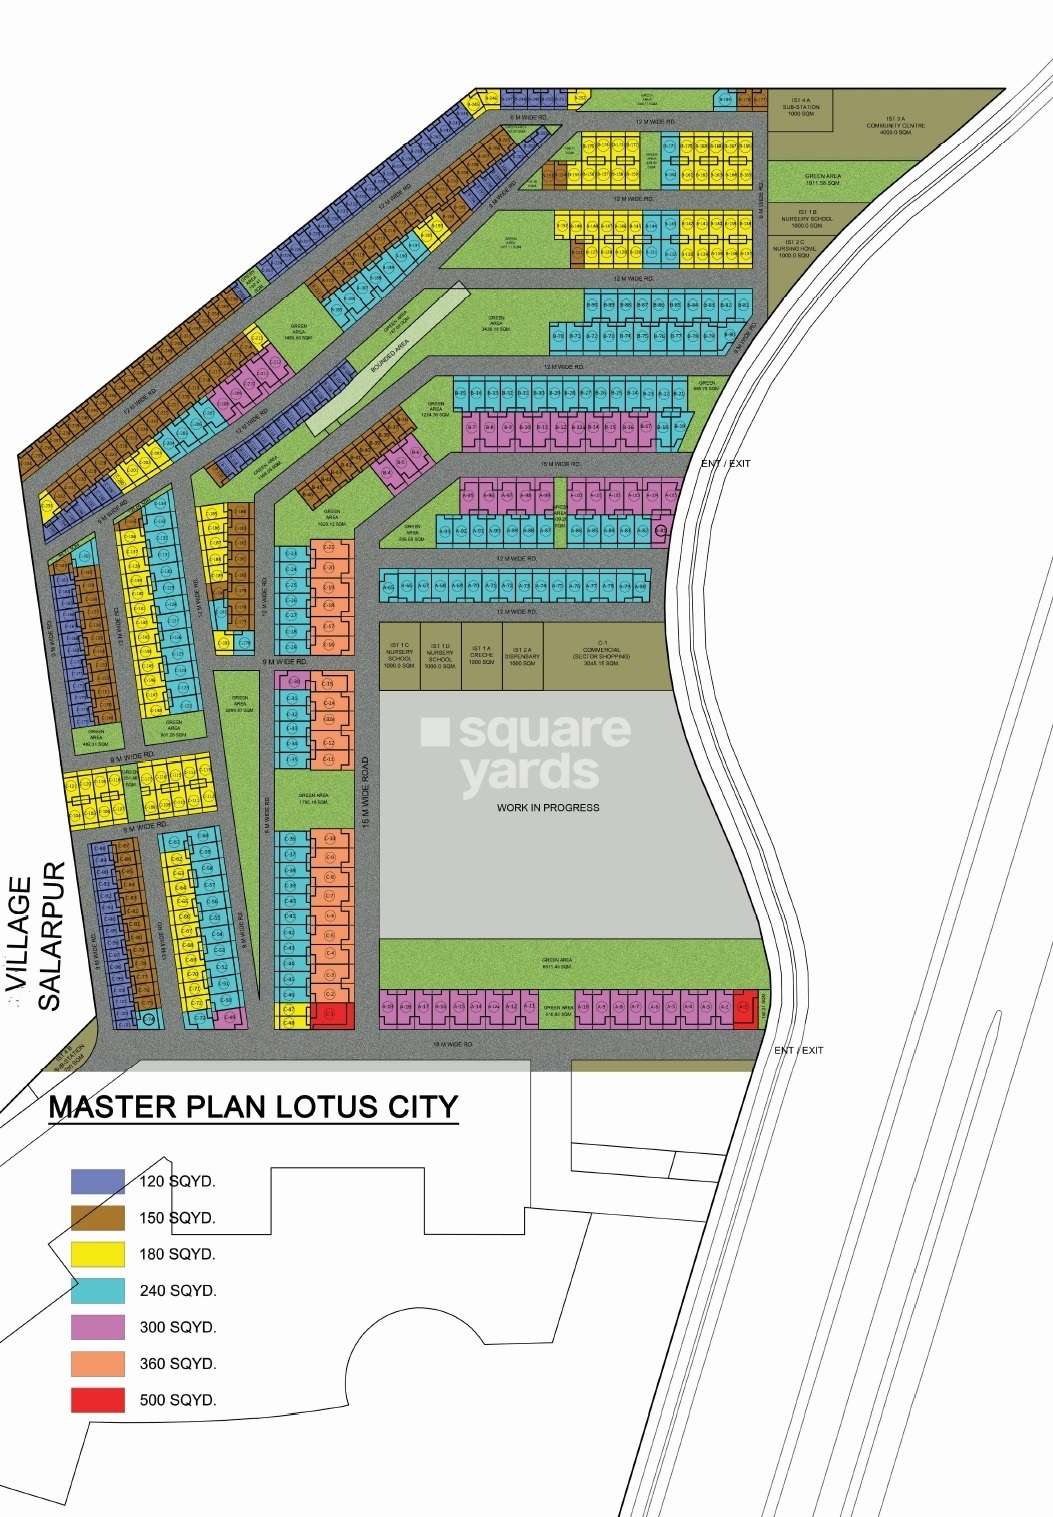 3c lotus city project master plan image1 7444